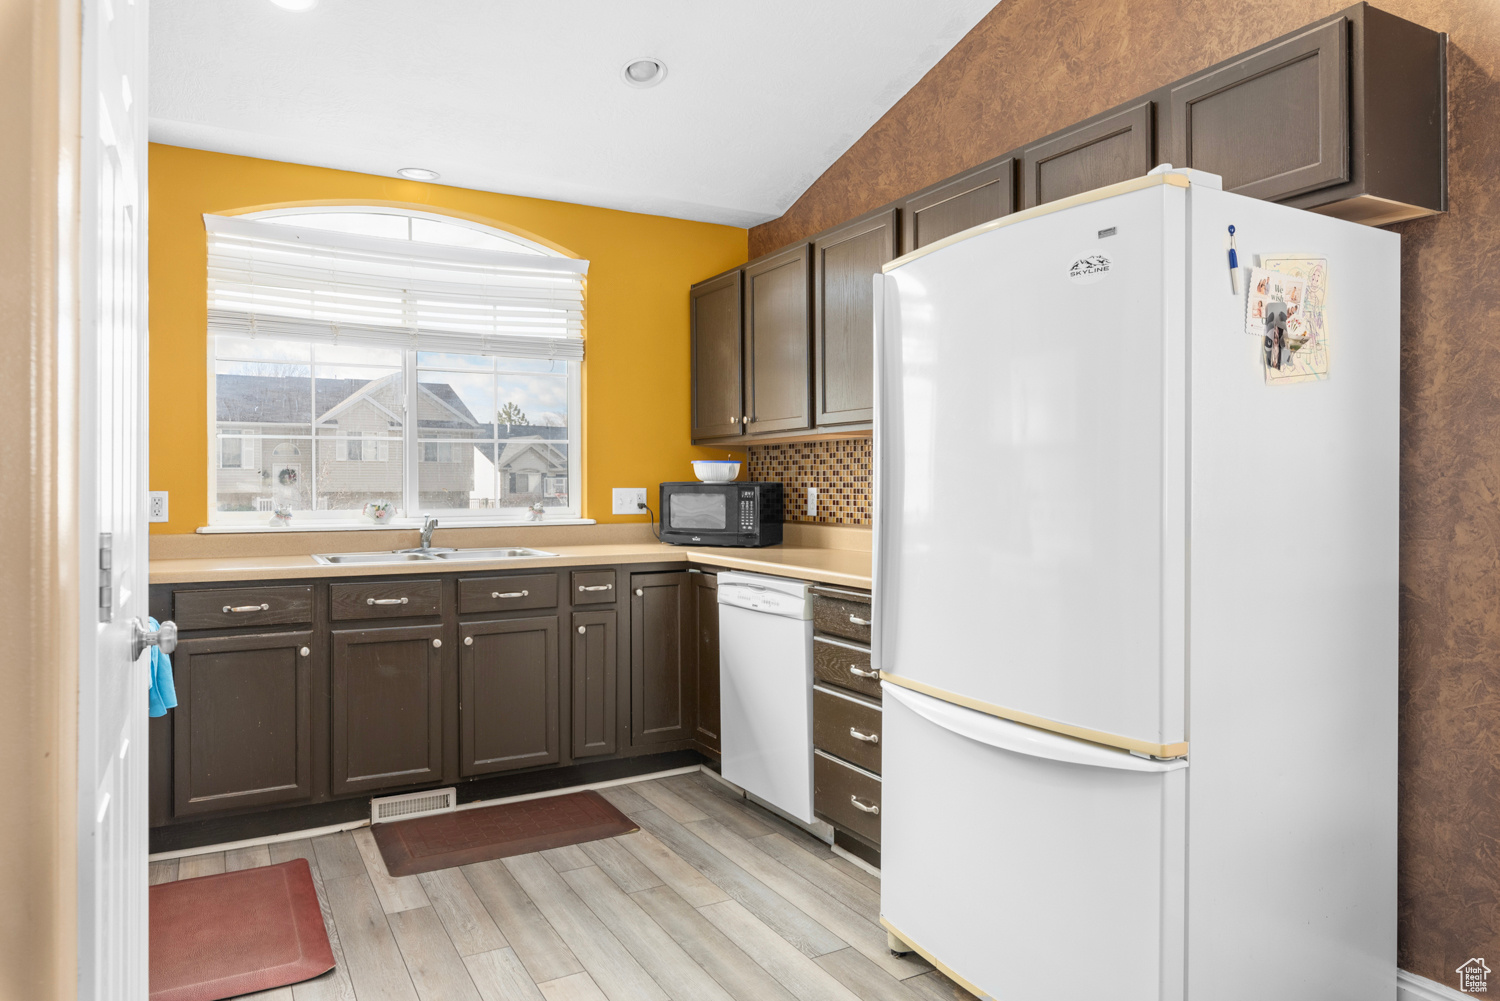 Kitchen featuring light hardwood / wood-style floors, white appliances, sink, vaulted ceiling, and tasteful backsplash